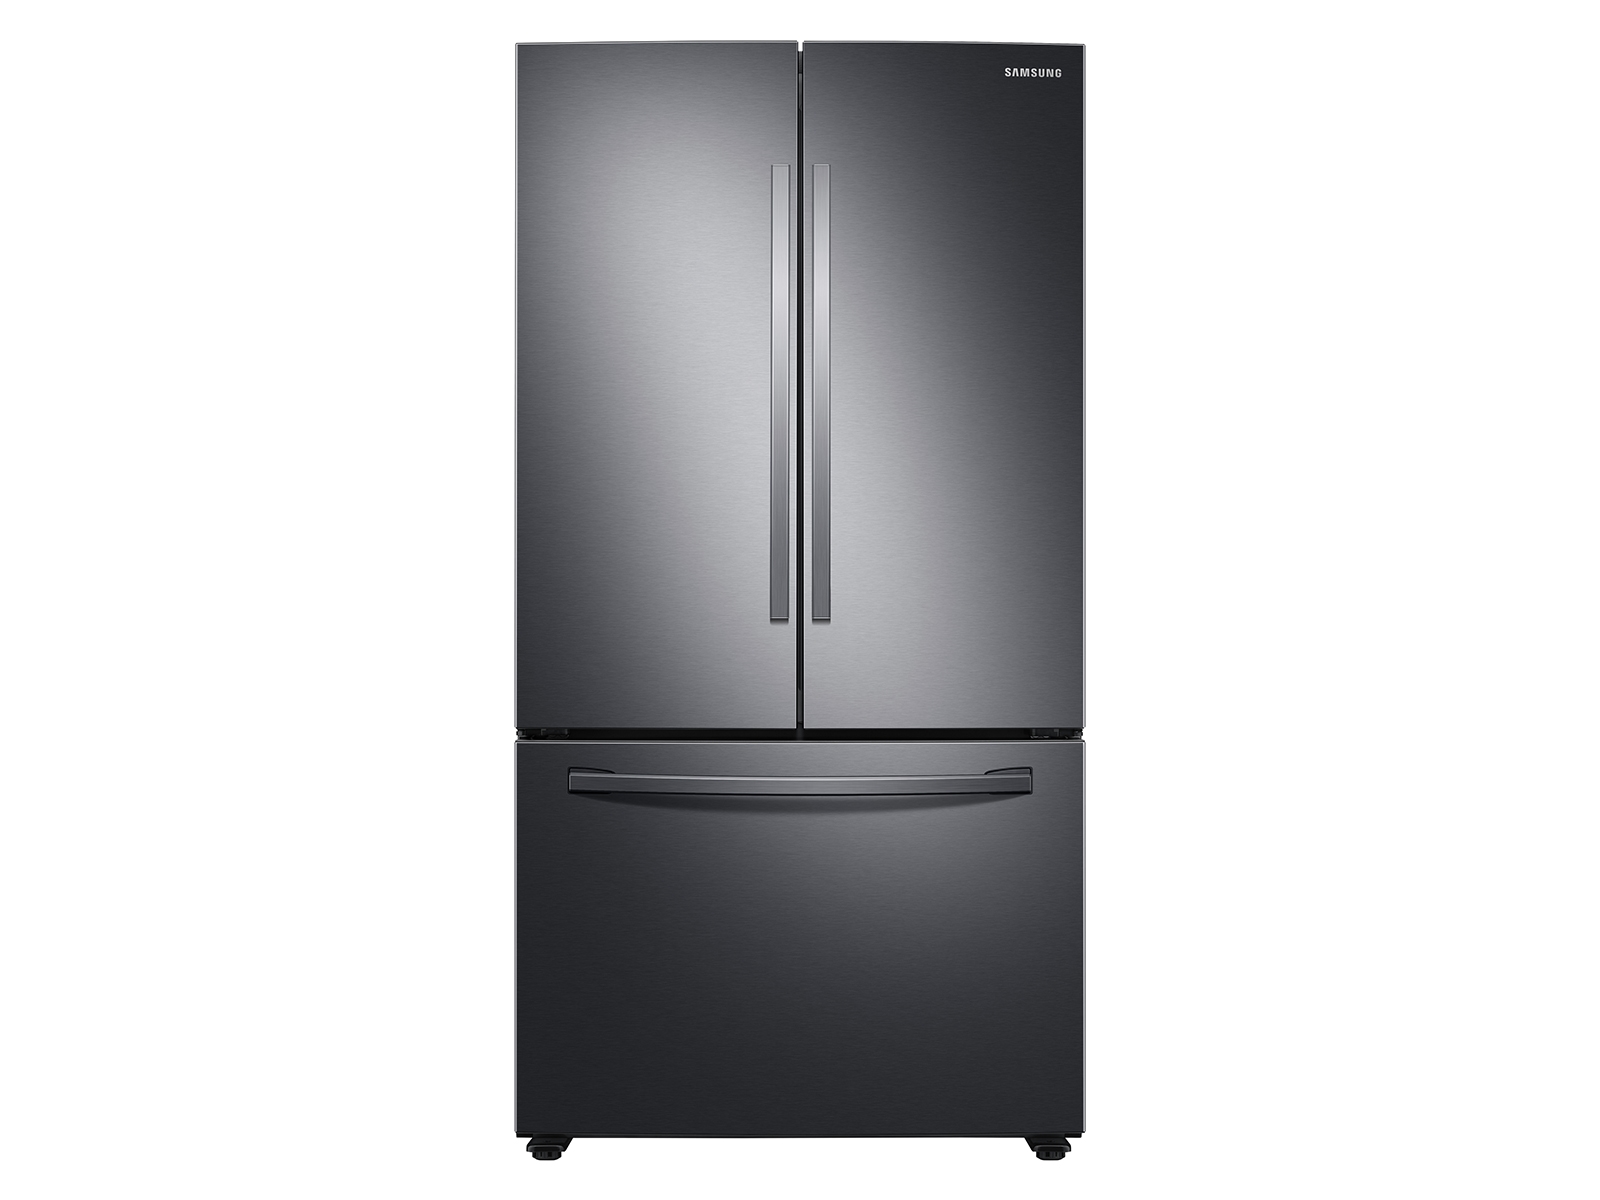 Photos - Fridge Samsung 28 cu. ft. Large Capacity 3-Door French Door Refrigerator with Int 